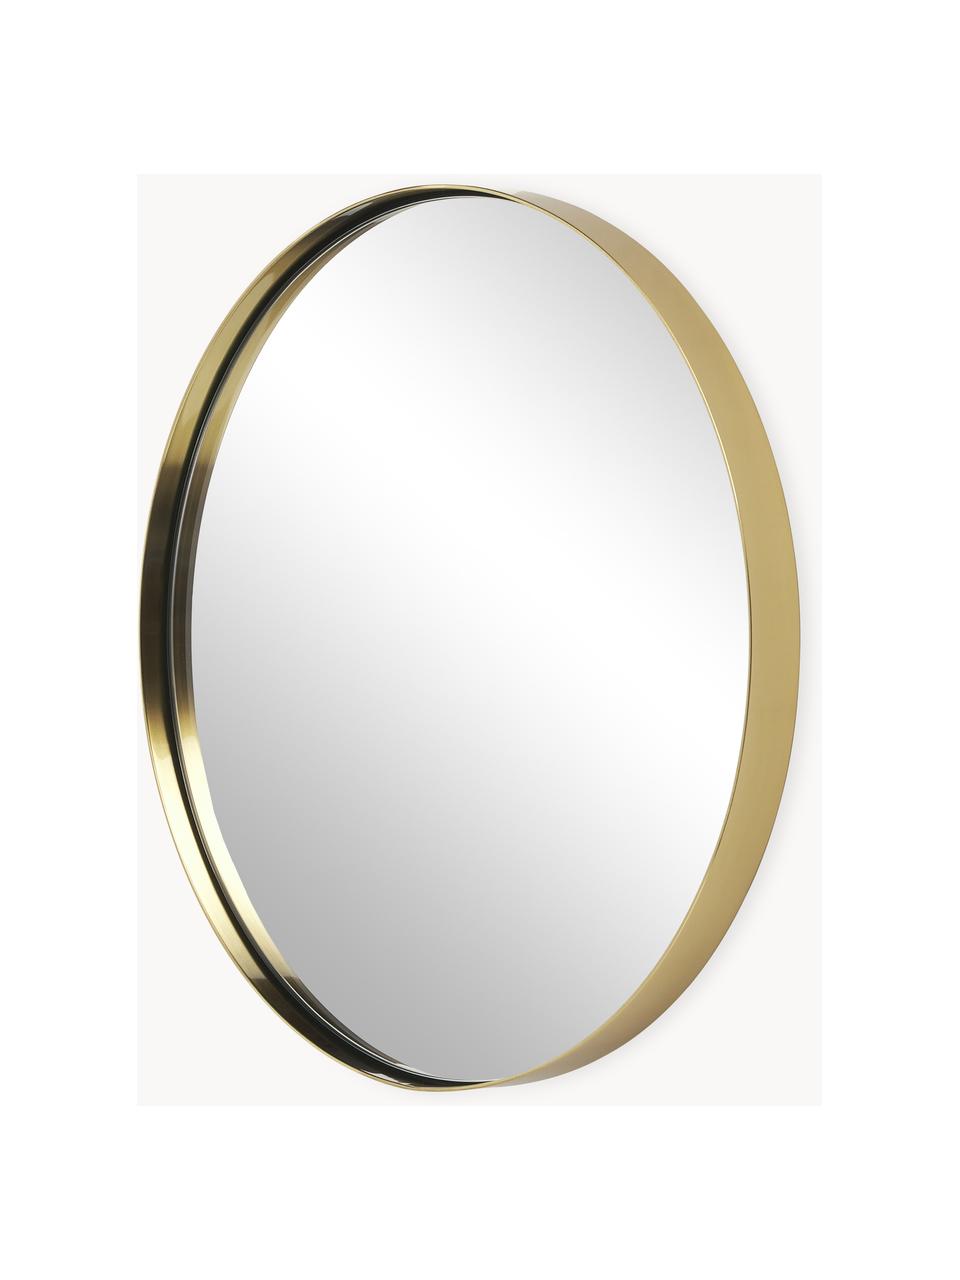 Sada kulatých zrcadel se zlatým kovovým rámem Lacie, 3 díly, Zlatá, Sada s různými velikostmi